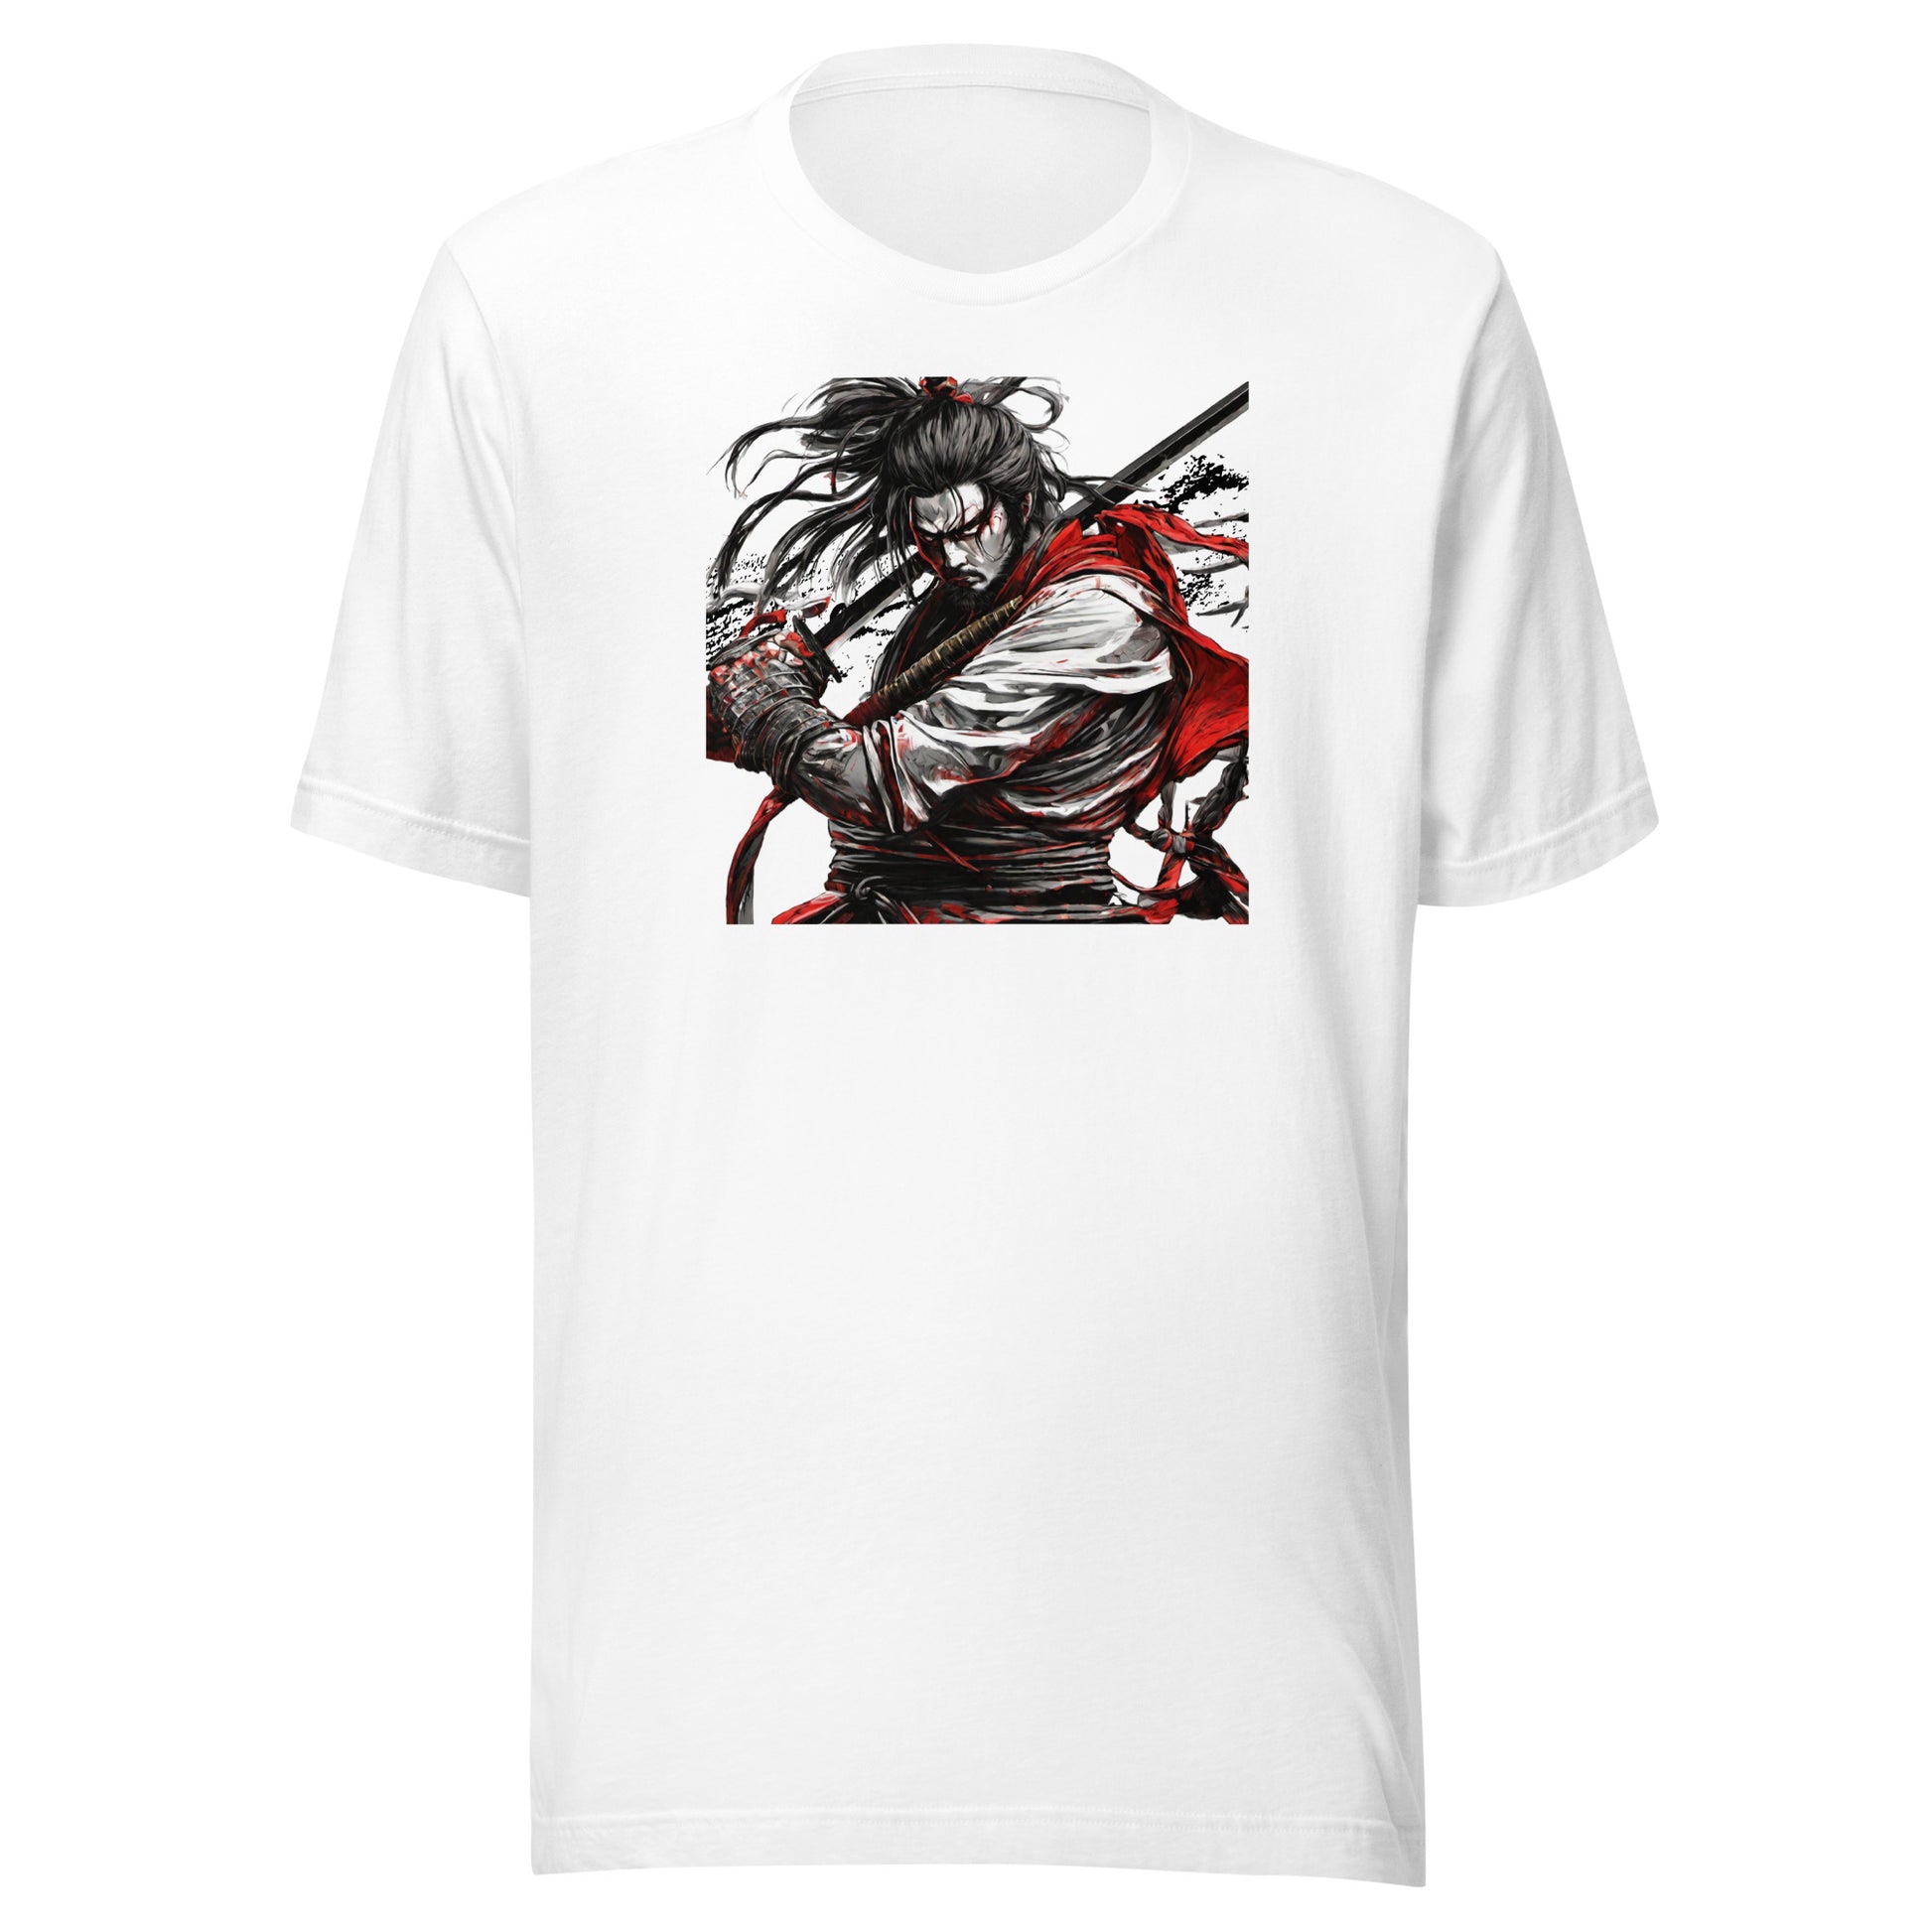 Graceful Warrior Men's Graphic T-Shirt White